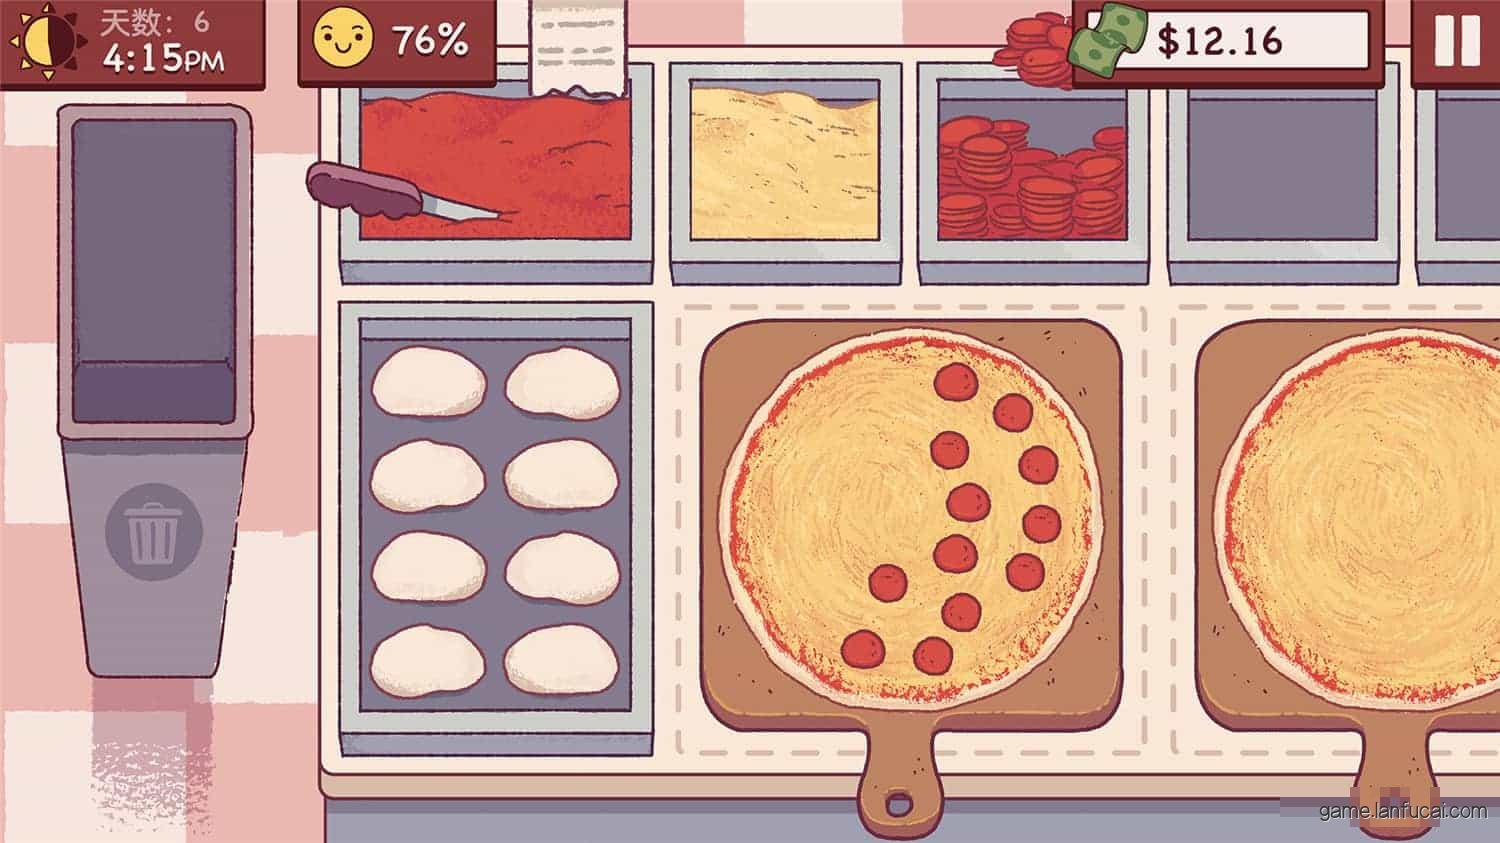 可口的披萨，美味的披萨/Good Pizza, Great Pizza7